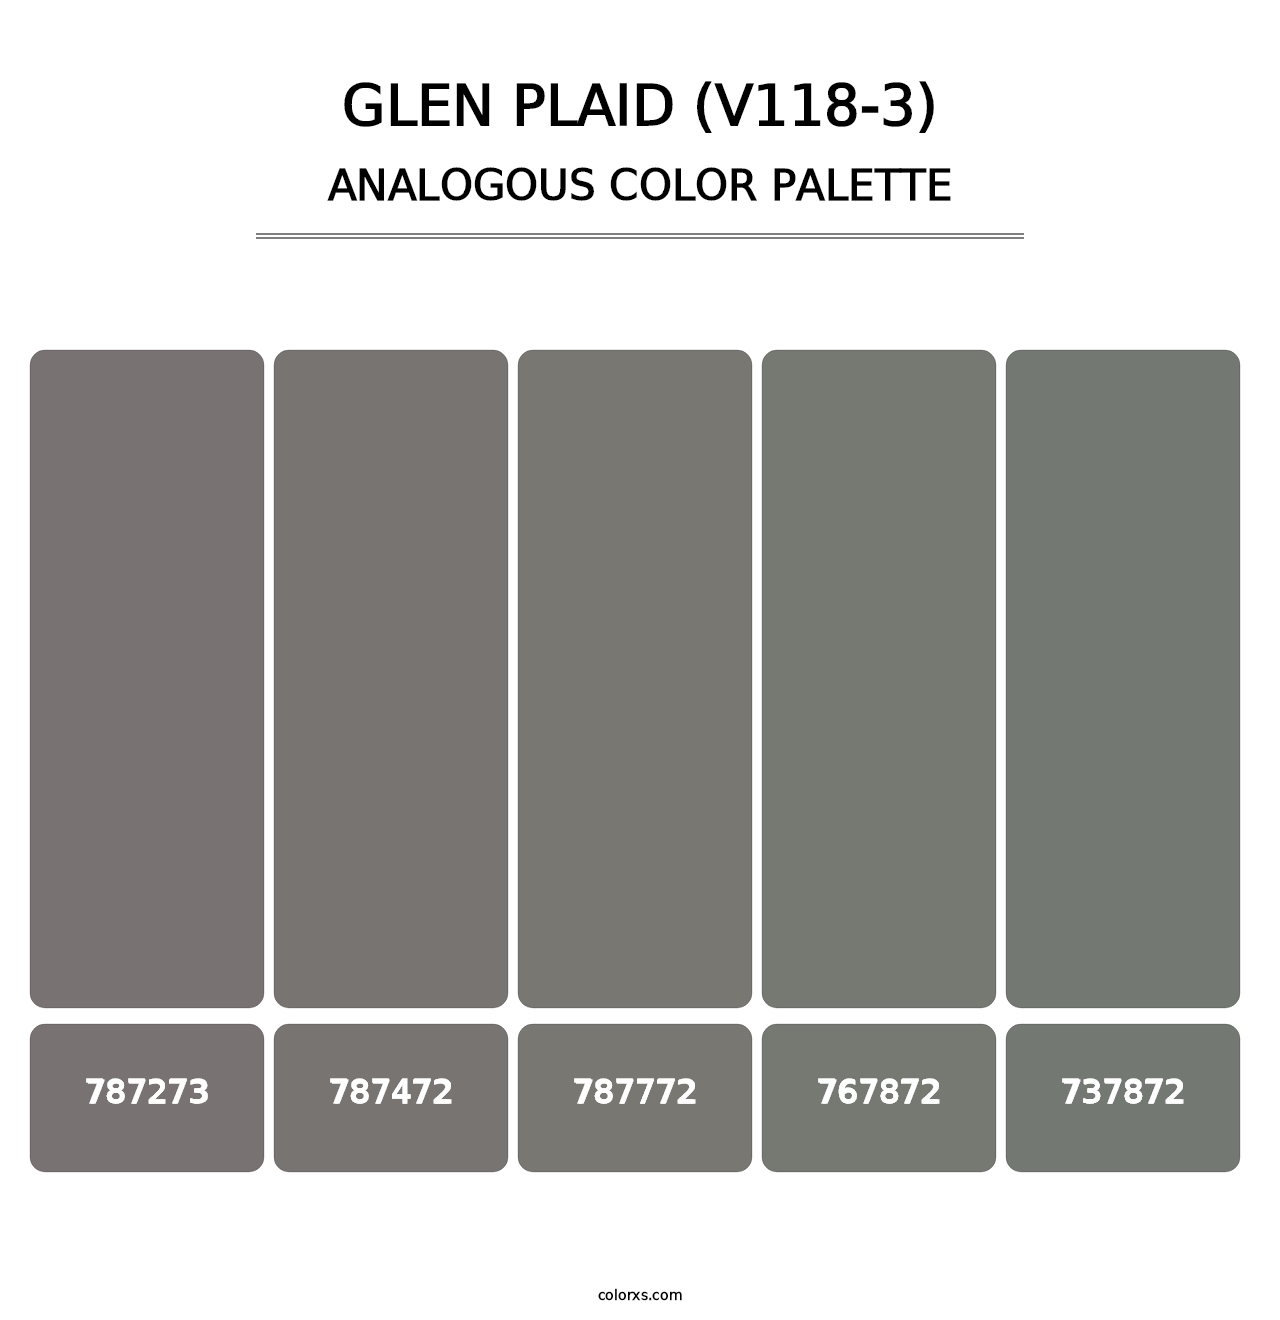 Glen Plaid (V118-3) - Analogous Color Palette